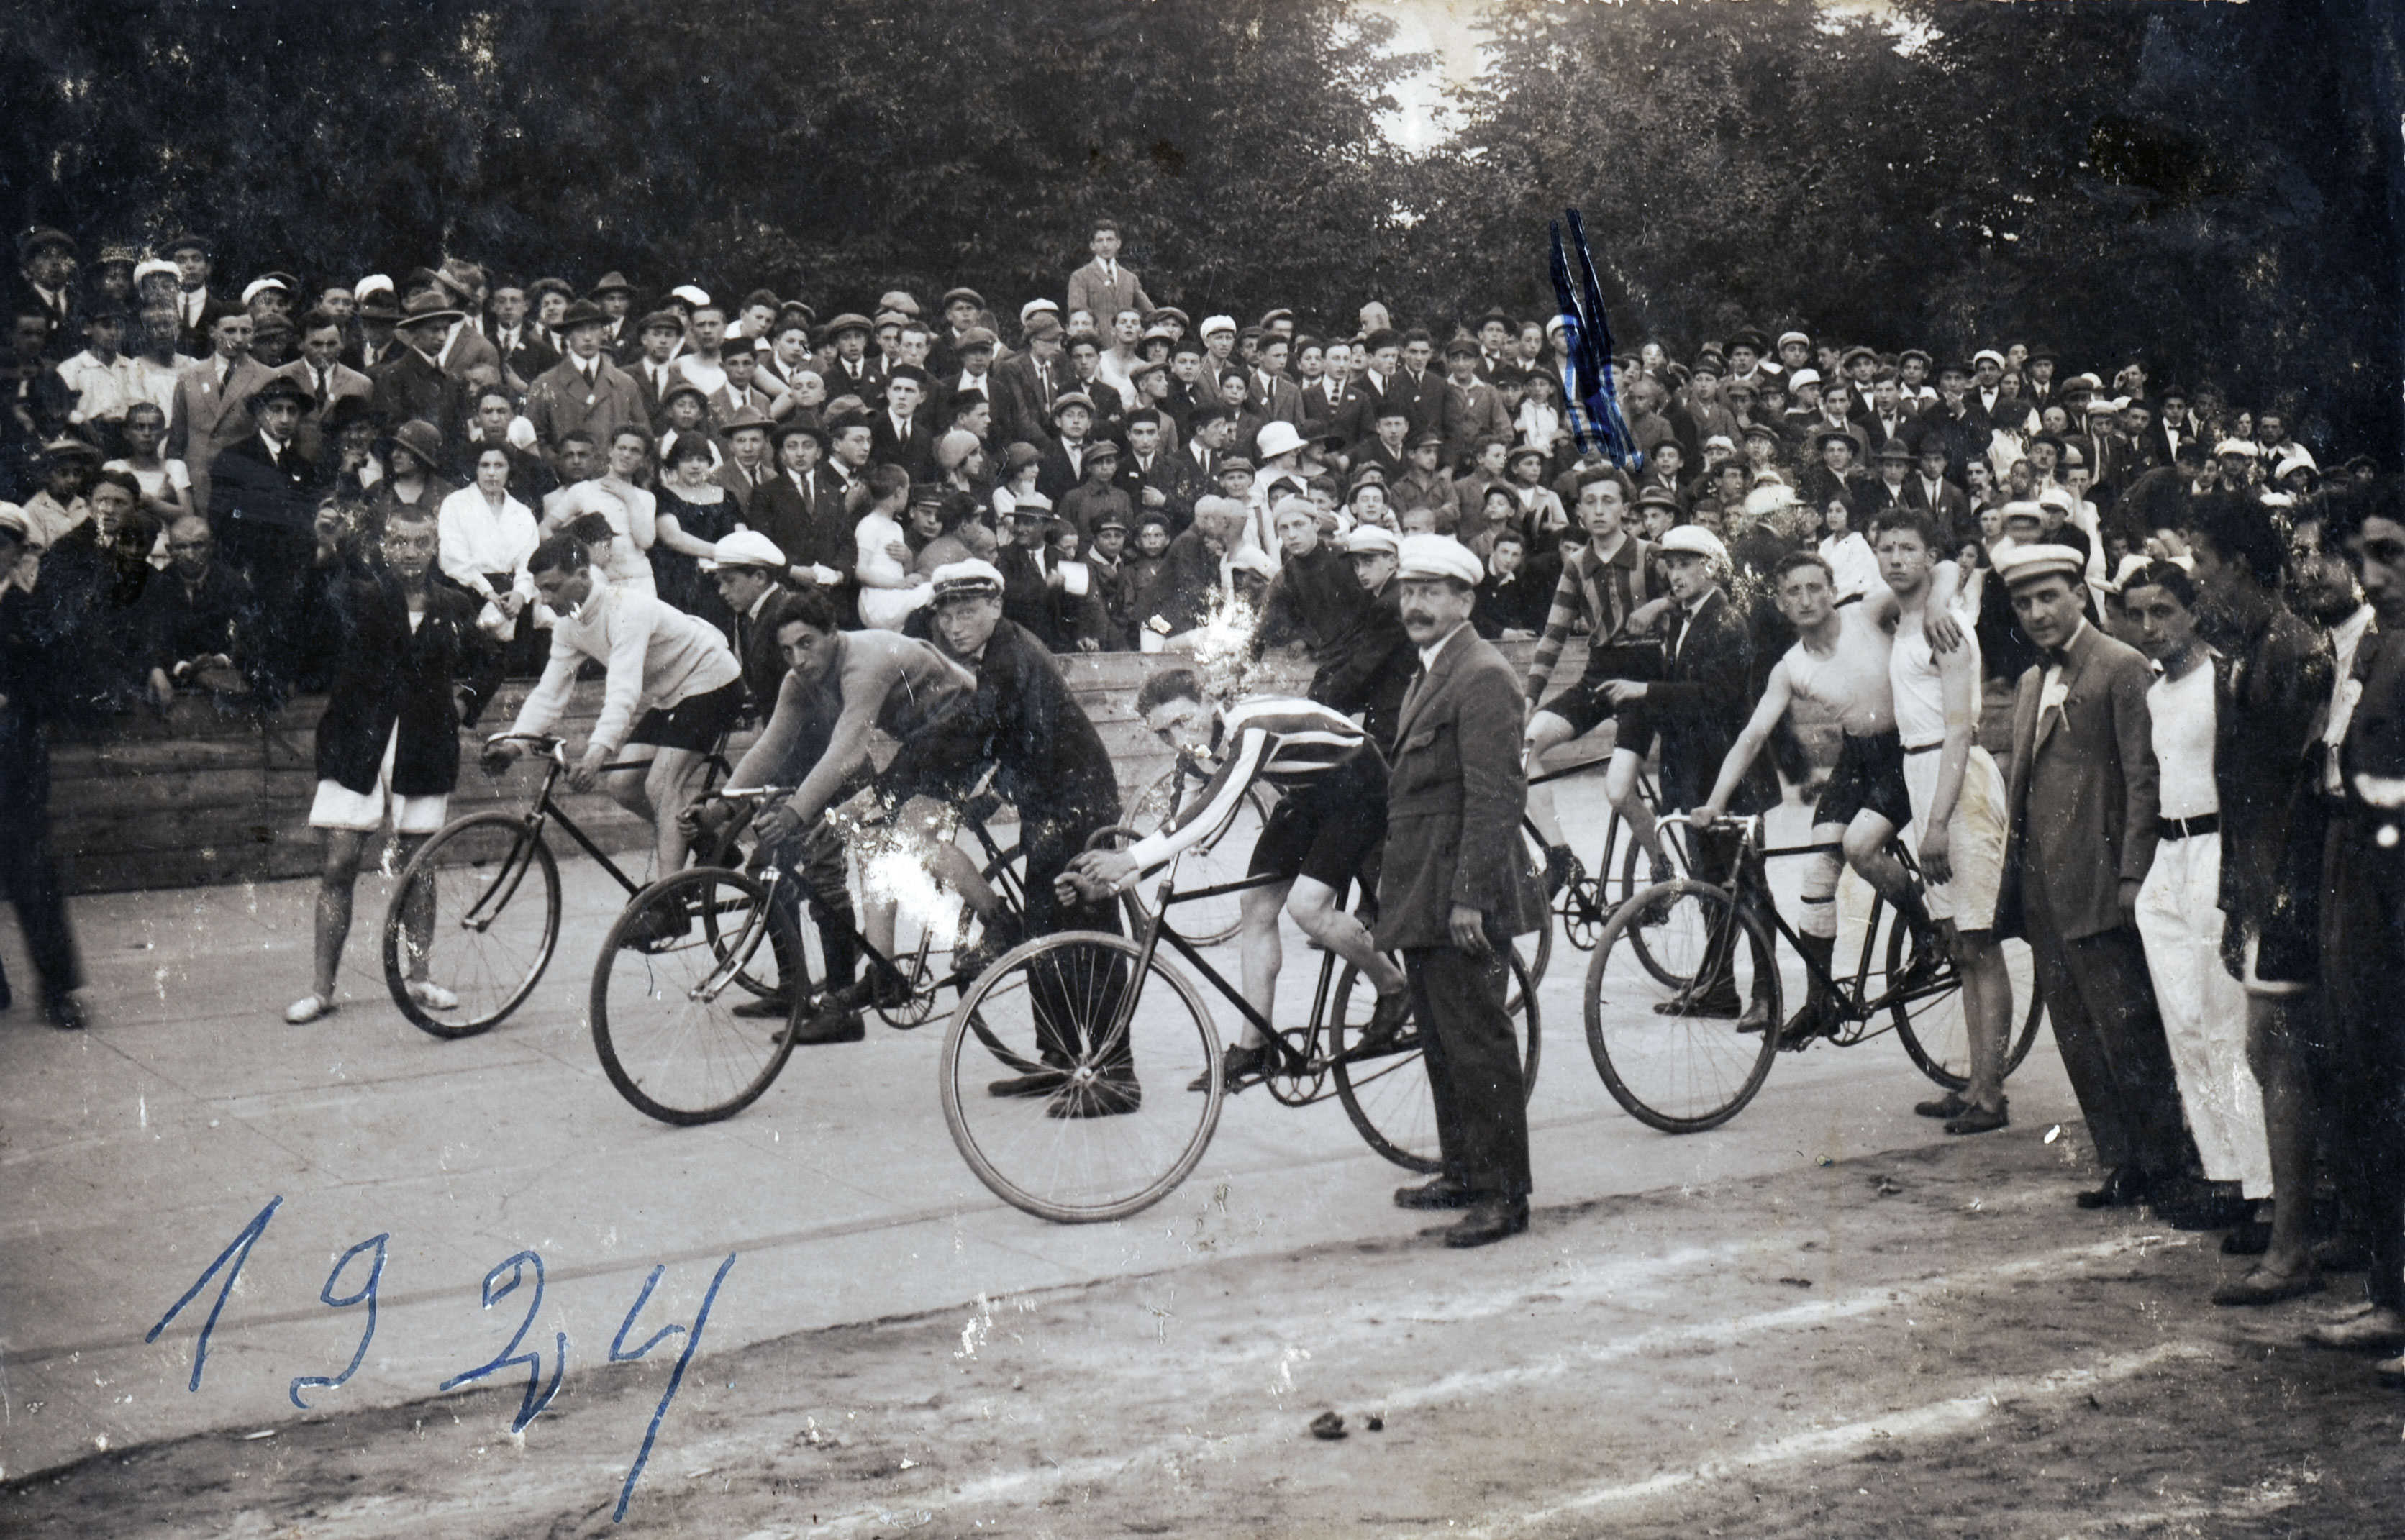 Моше Цукерман (отмечен синим на фотографии) и его товарищи по спортивному клубу «Бар Кохба» на старте велогонки, Лодзь, 1924 год